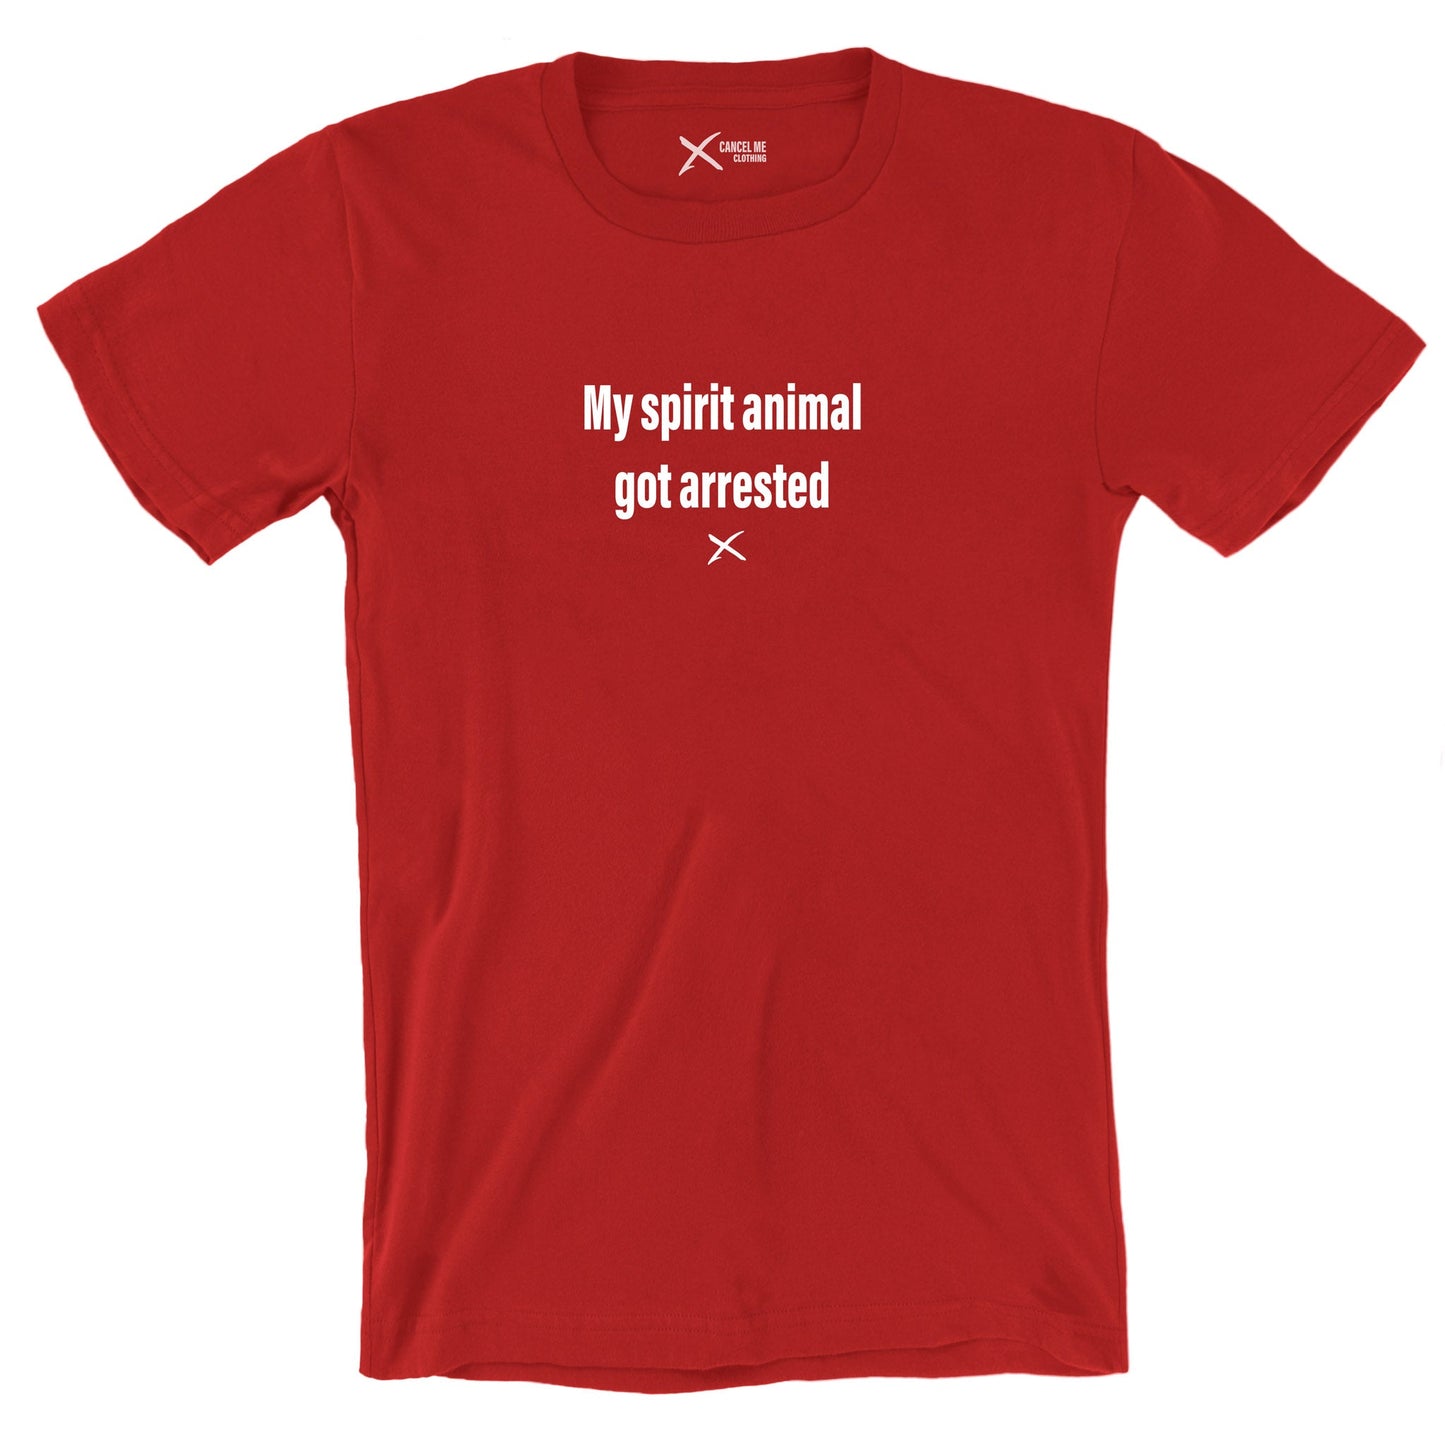 My spirit animal got arrested - Shirt